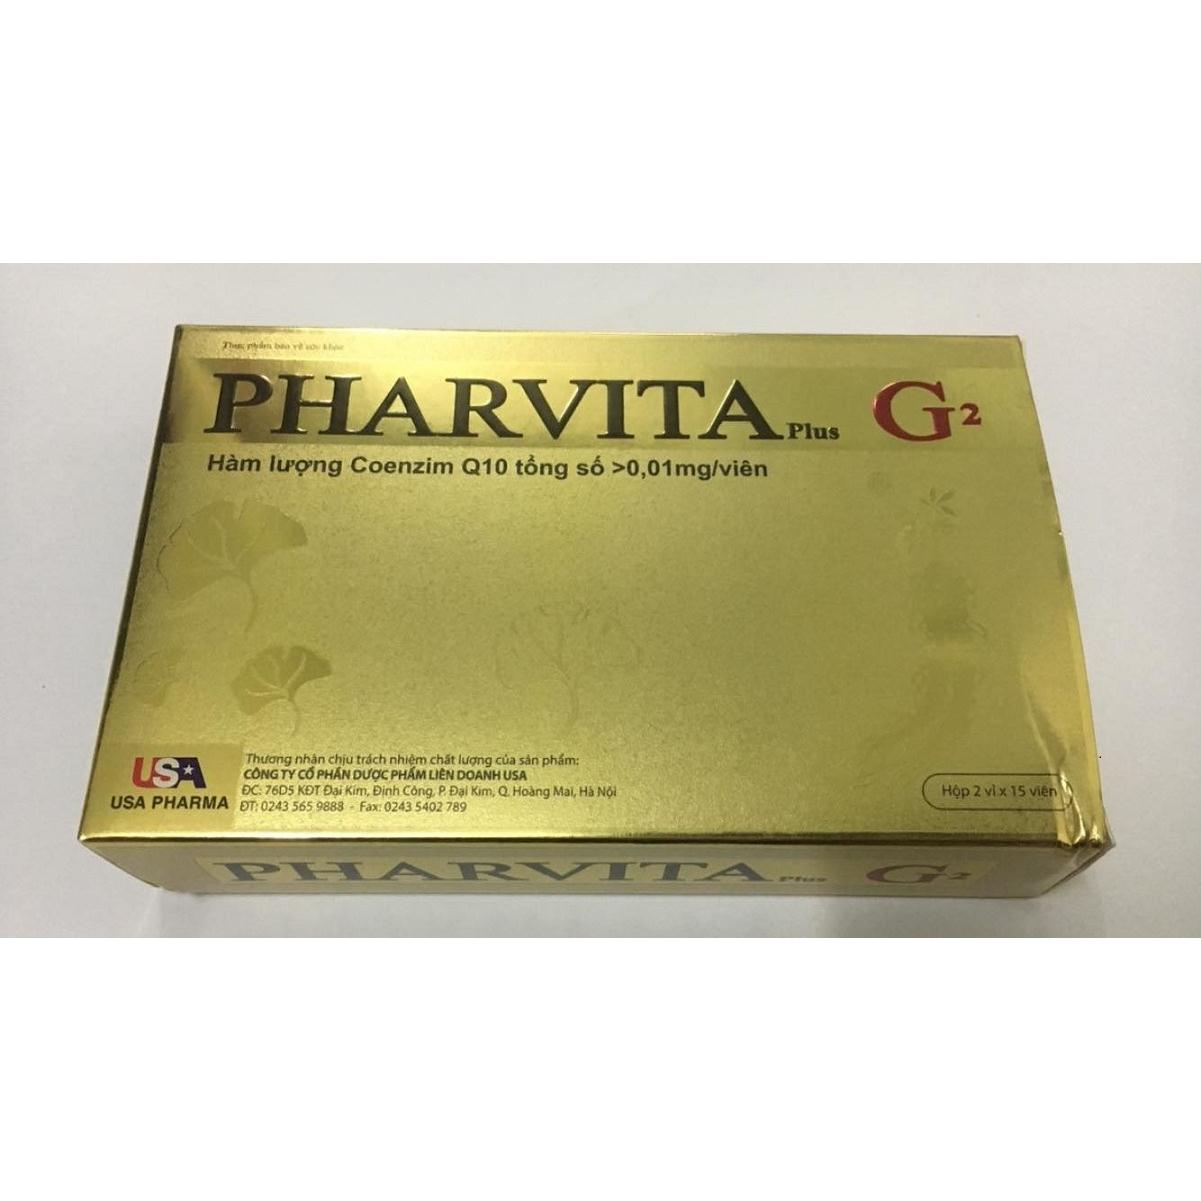 Pharvita Plus G2